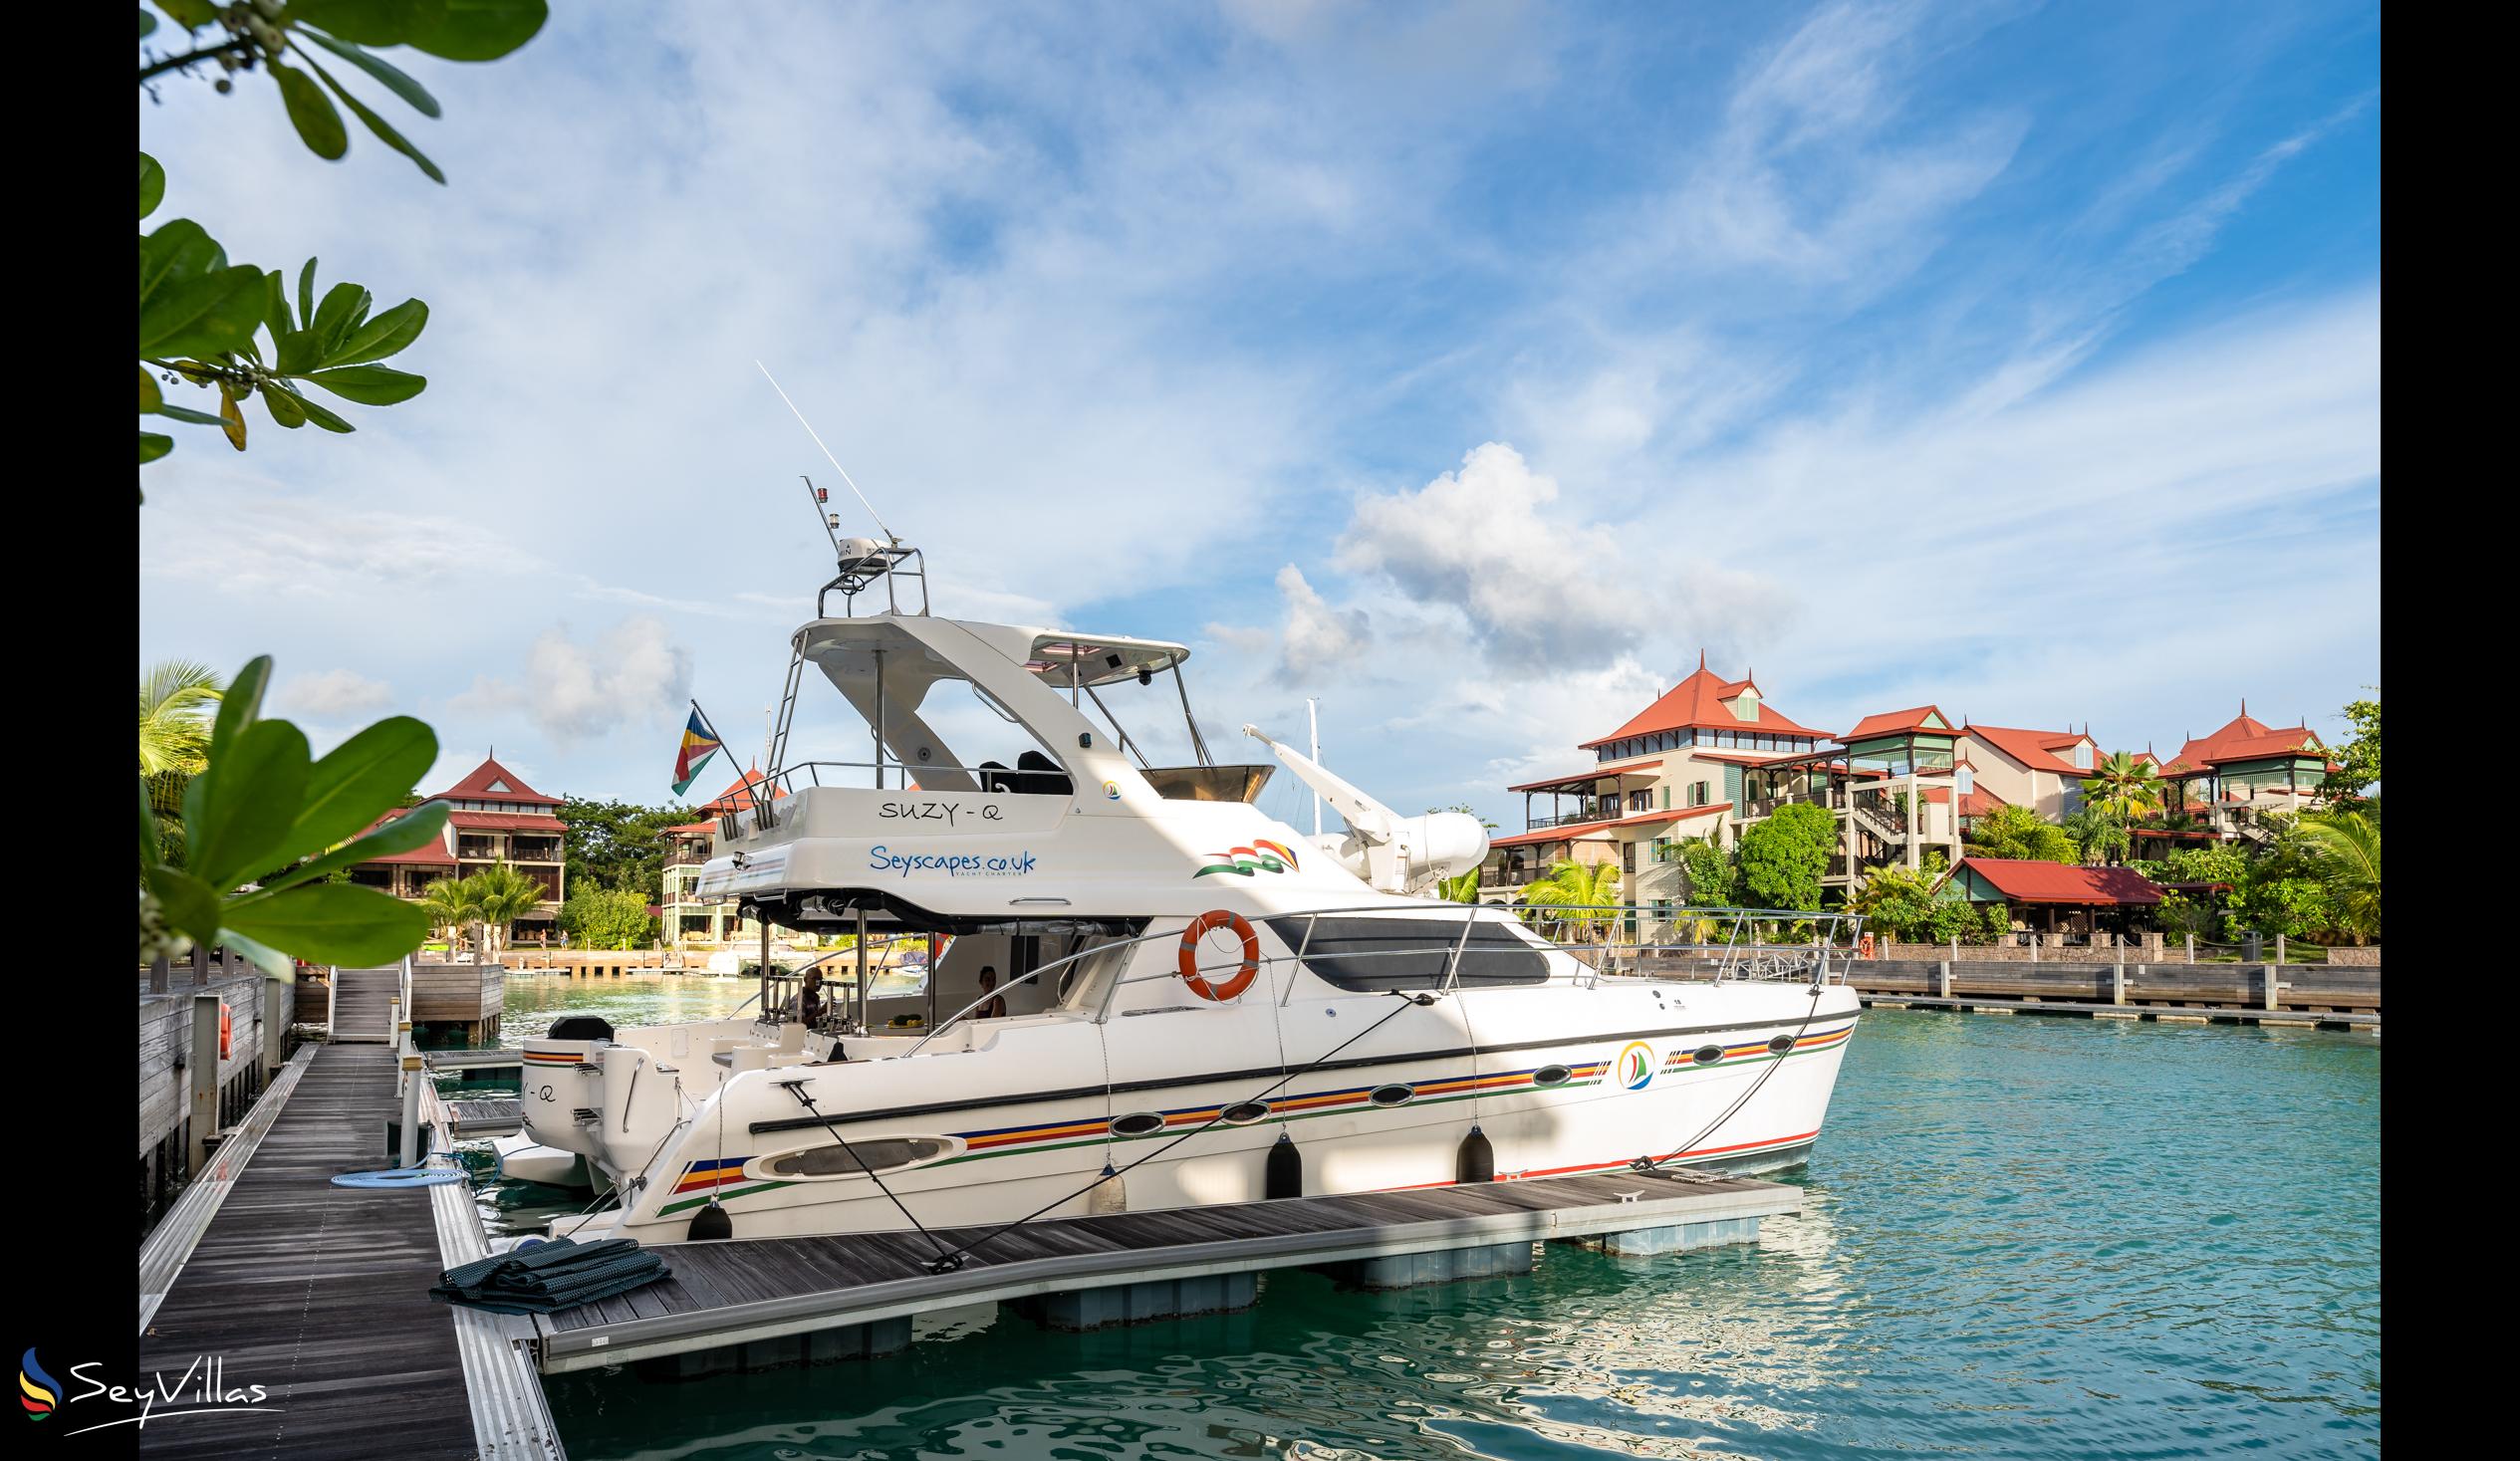 Foto 53: Seyscapes Yacht Charter - Vollcharter Suzy Q - Seychellen (Seychellen)